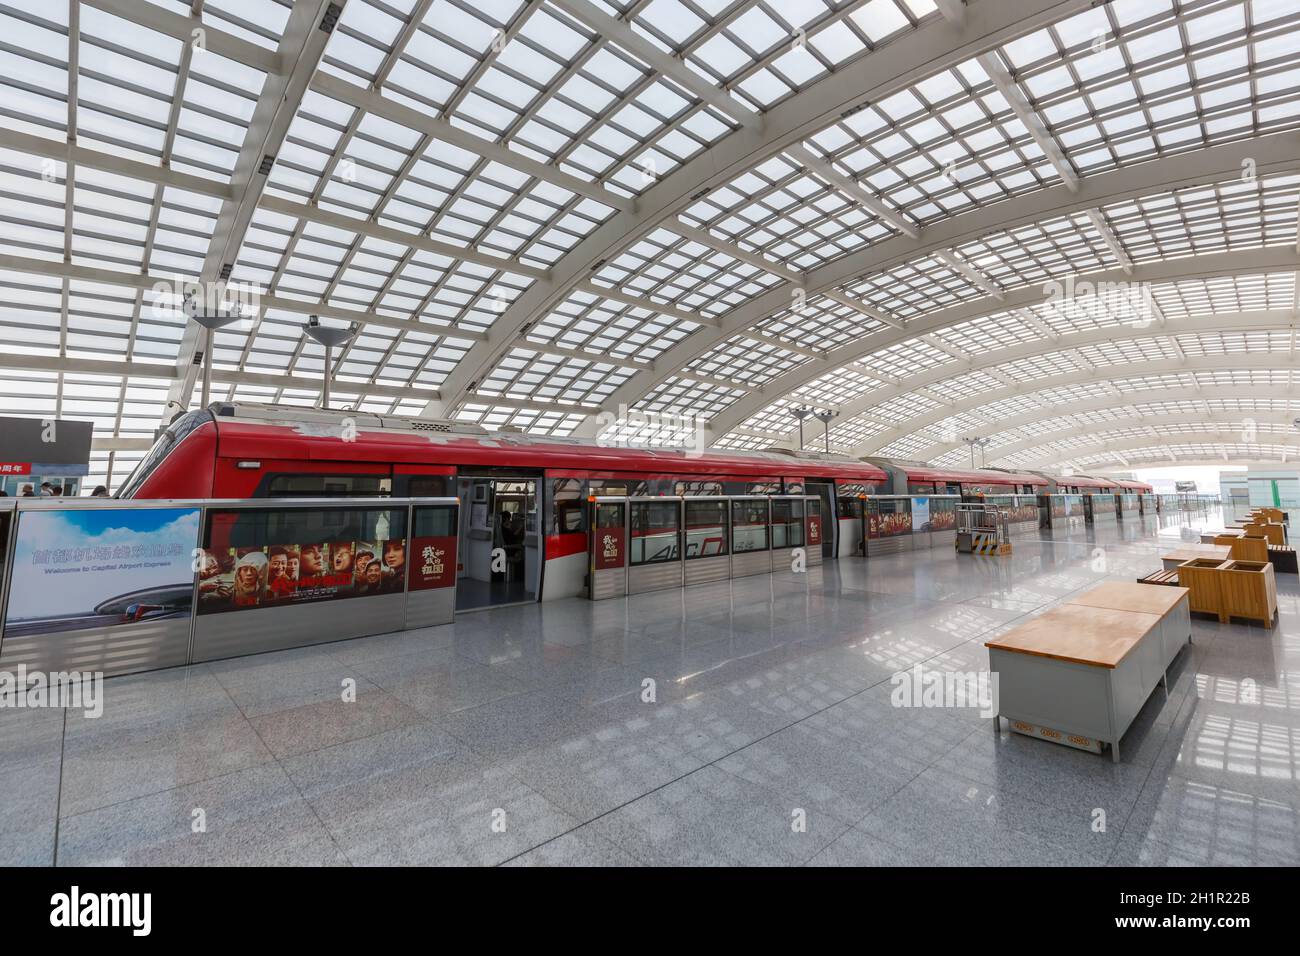 Beijing, China - October 1, 2019: Express train Station at Beijing Capital Airport (PEK) in China. Stock Photo